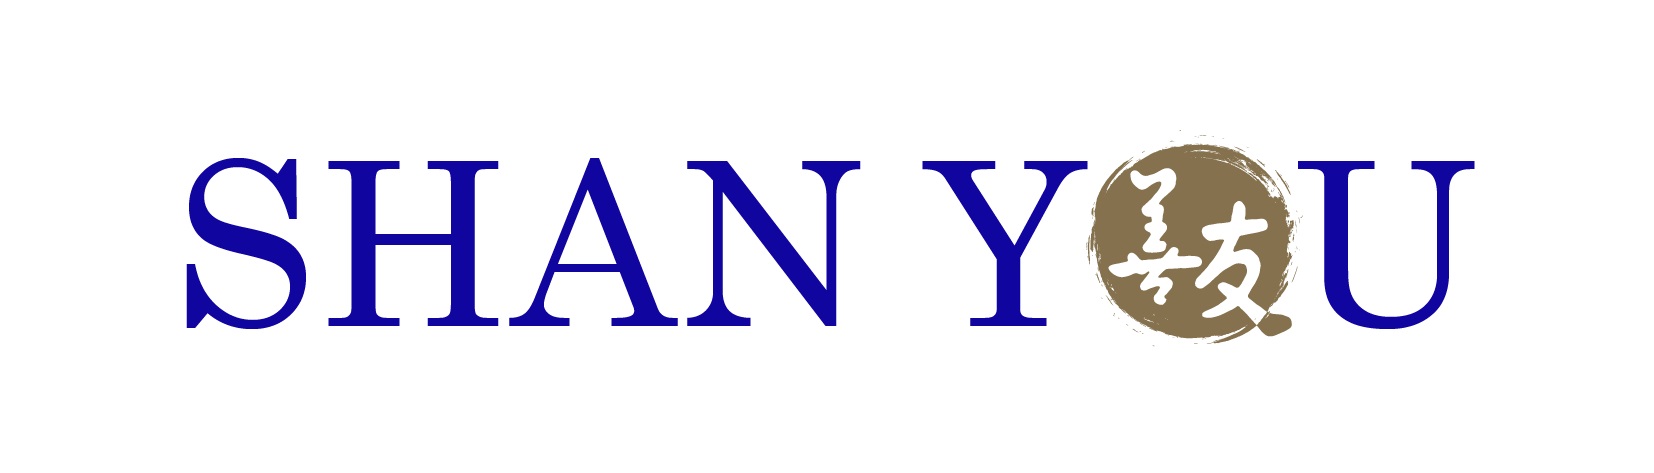 Shan You company logo